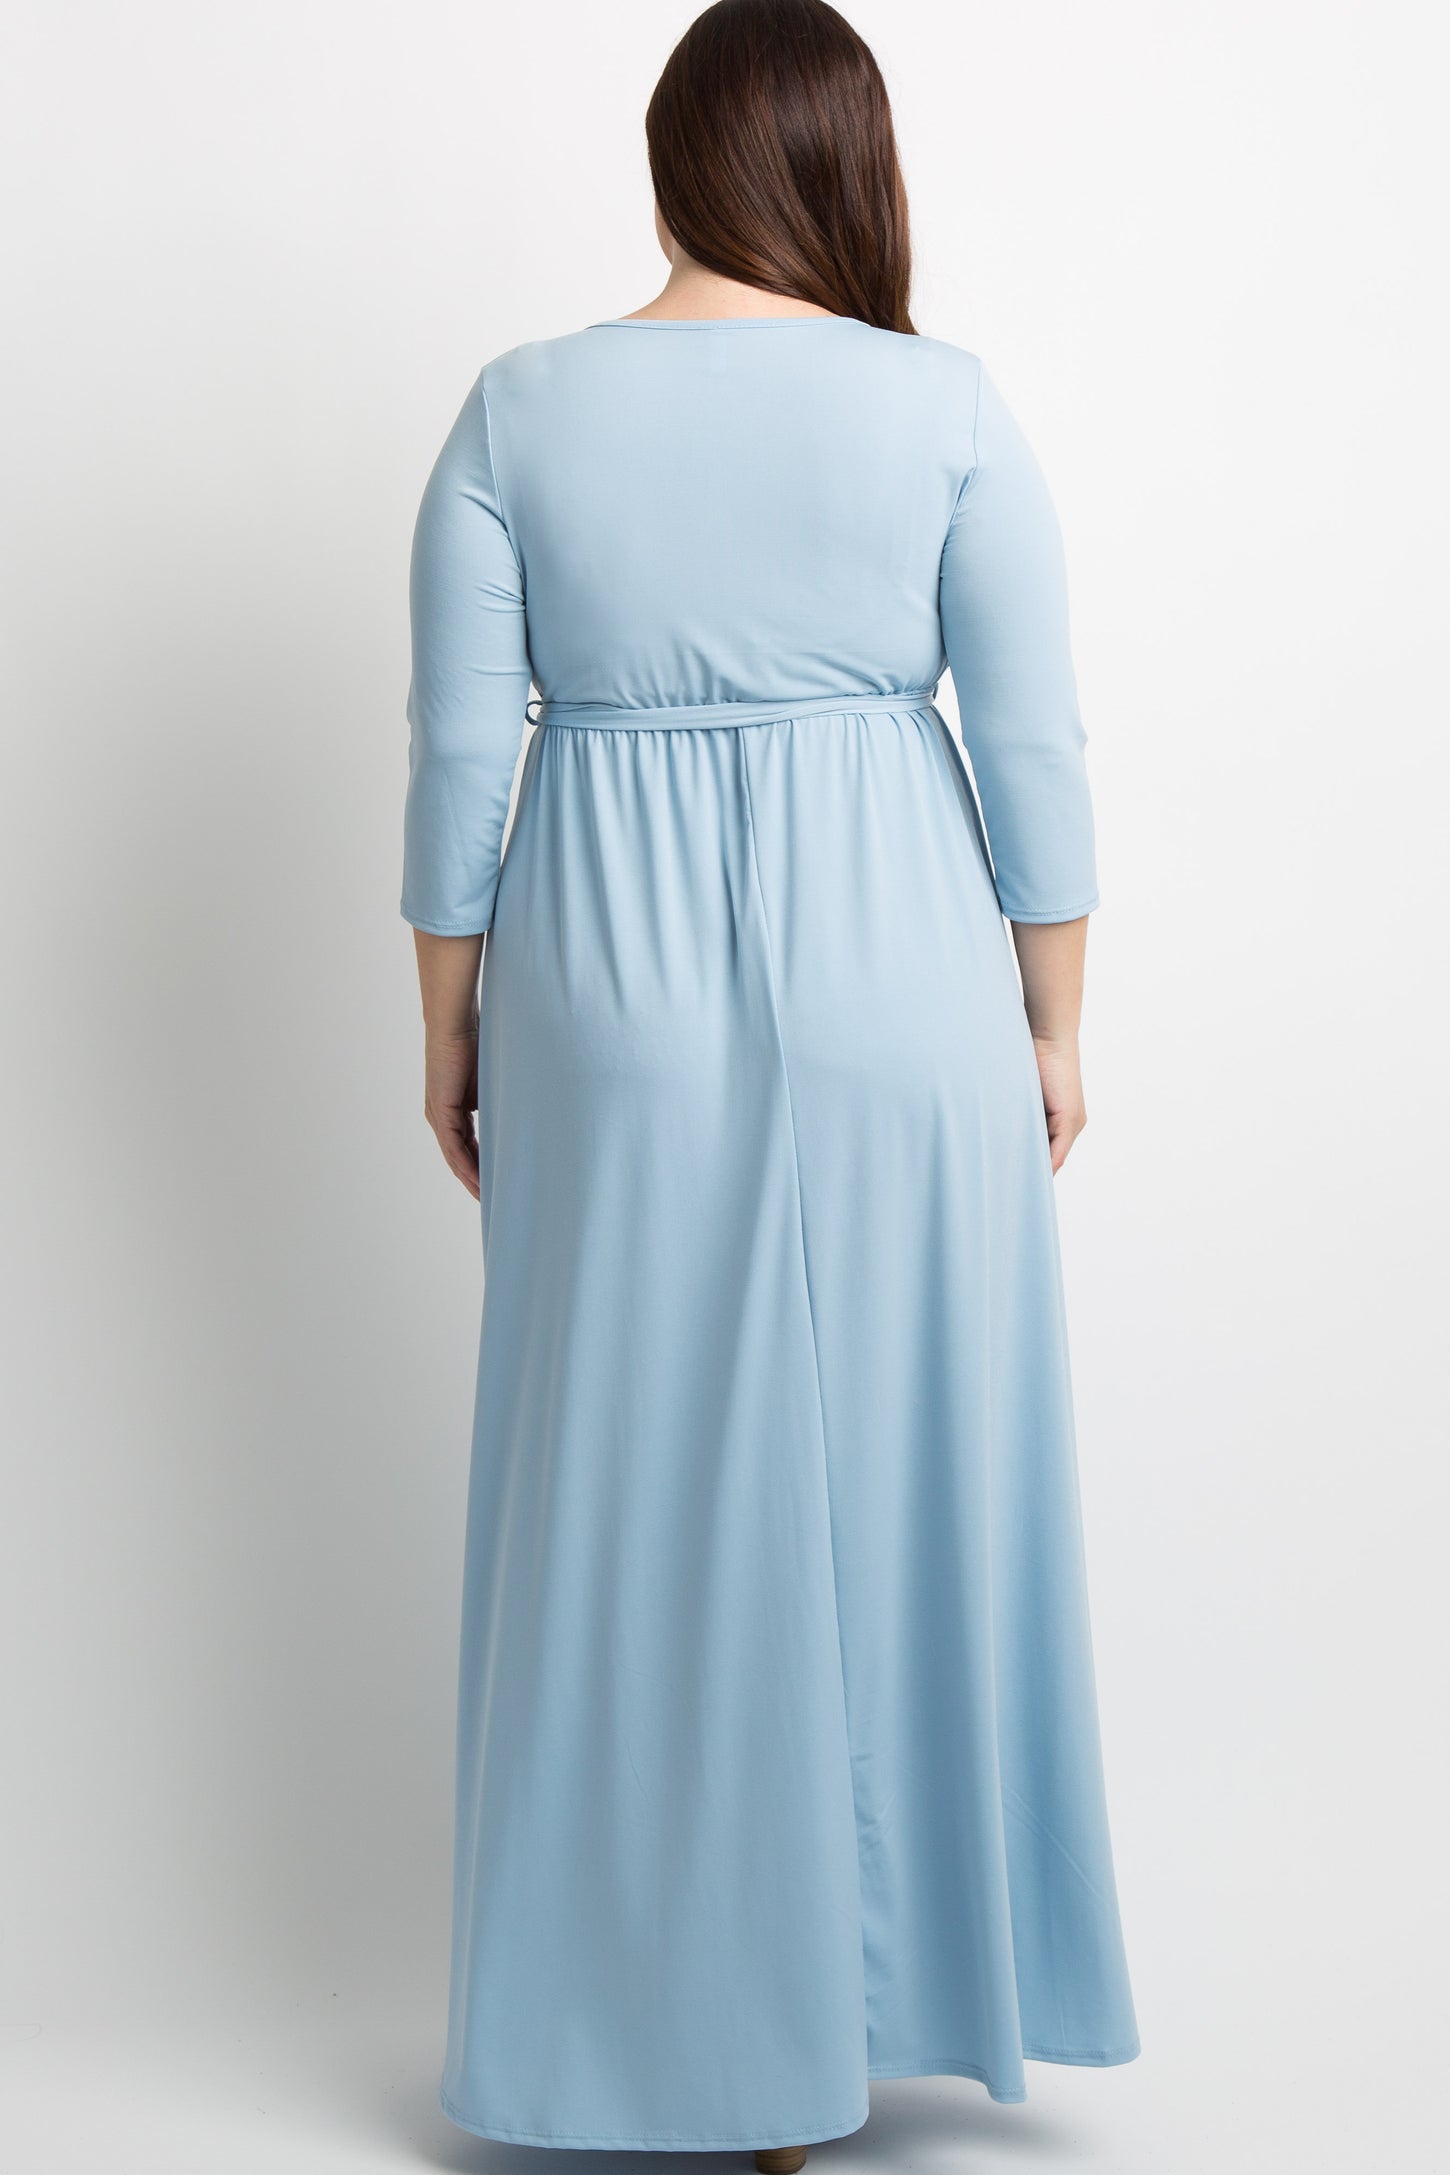 PinkBlush Light Blue Draped 3/4 Sleeve Plus Maxi Dress